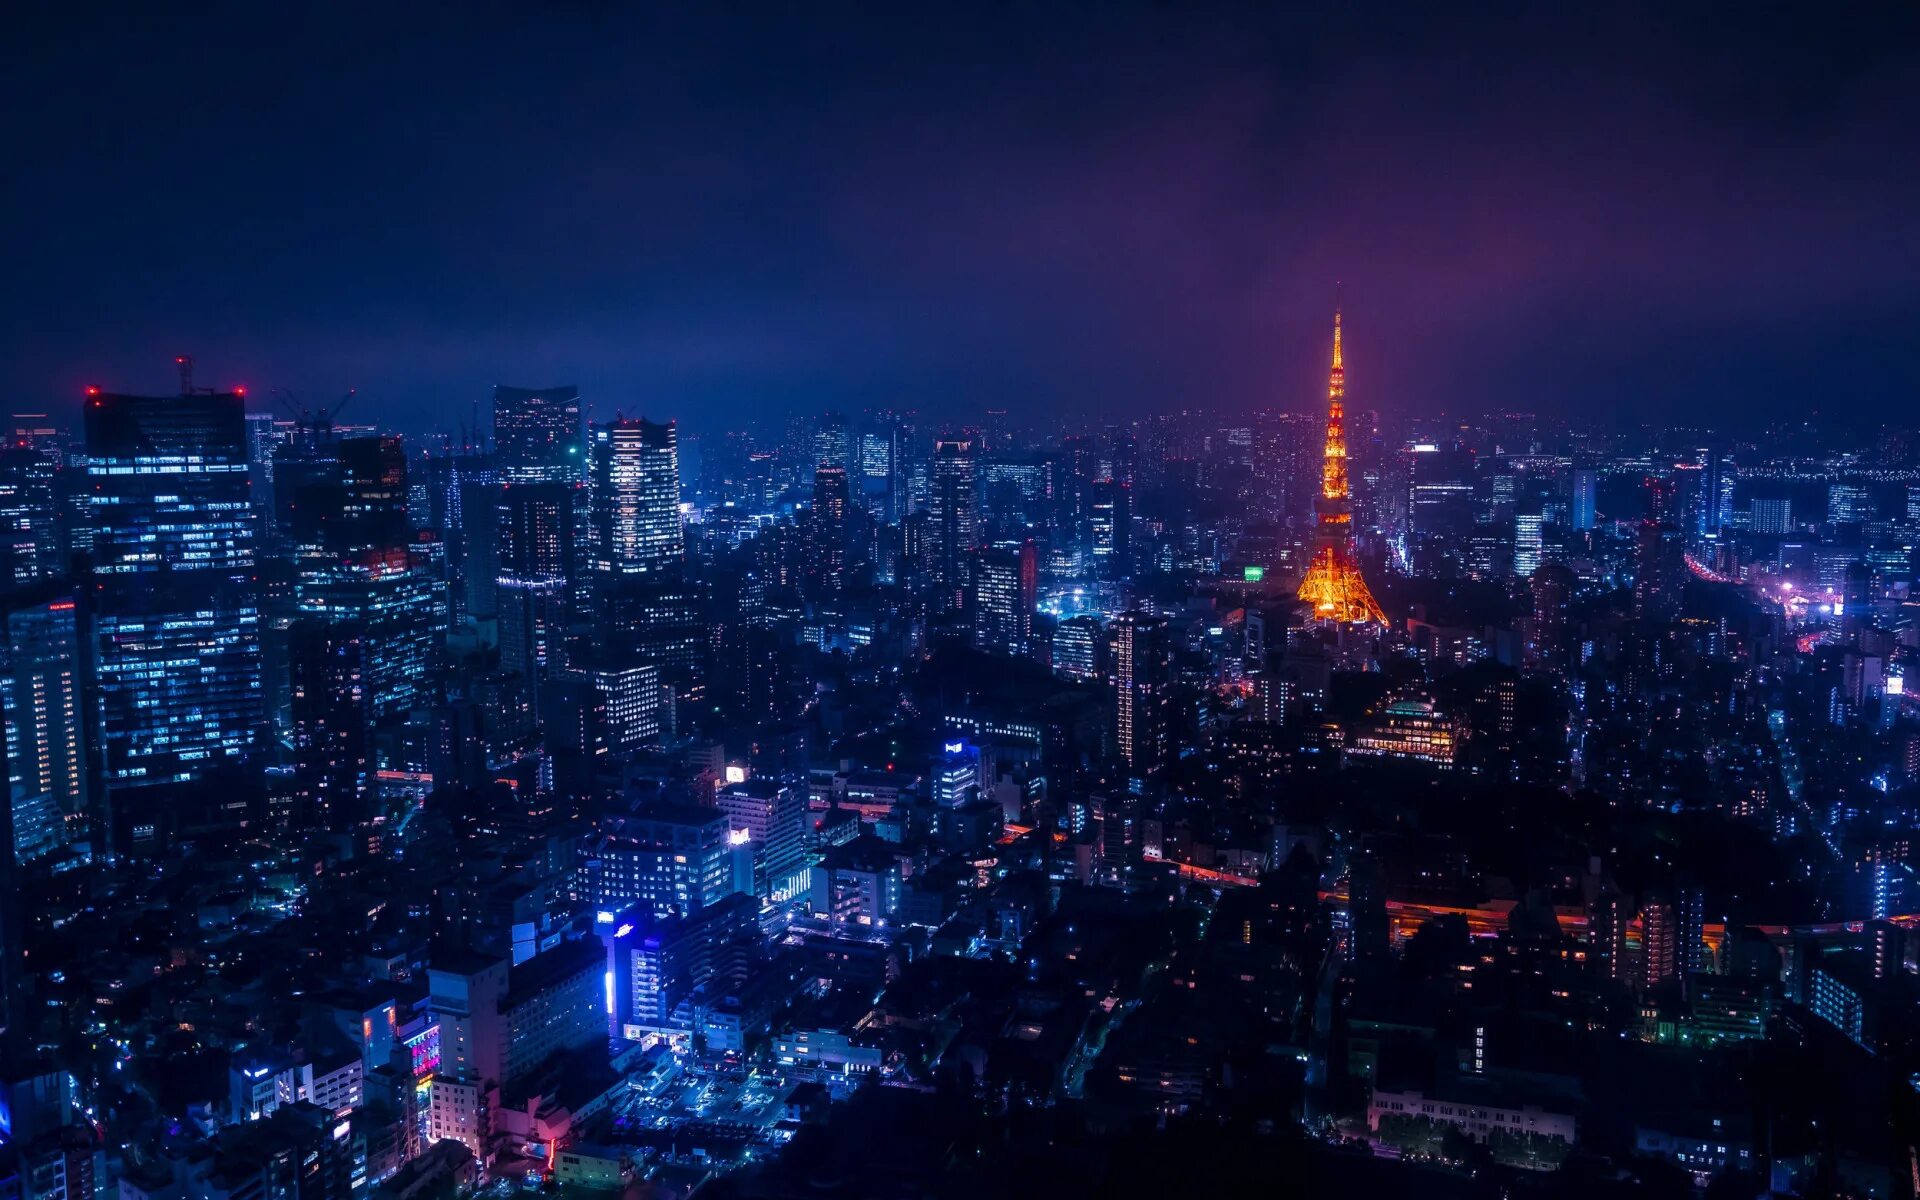 Tokyo 8. Скайлайн Токио. Tokyo Night Skyline. Токио панорама. Токио обои.